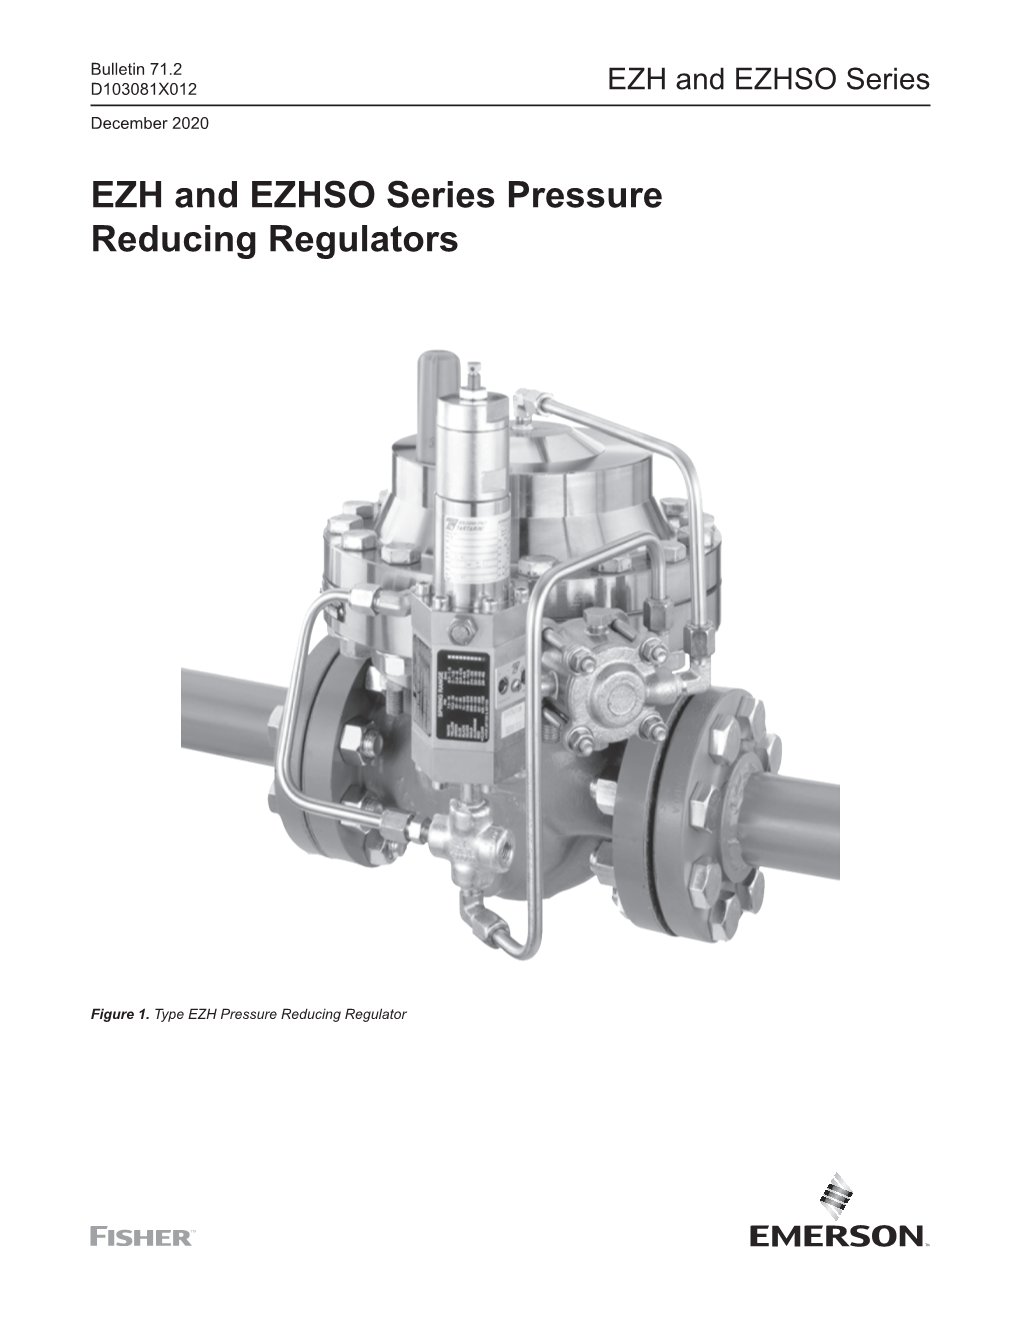 EZH and EZHSO Series Pressure Reducing Regulators